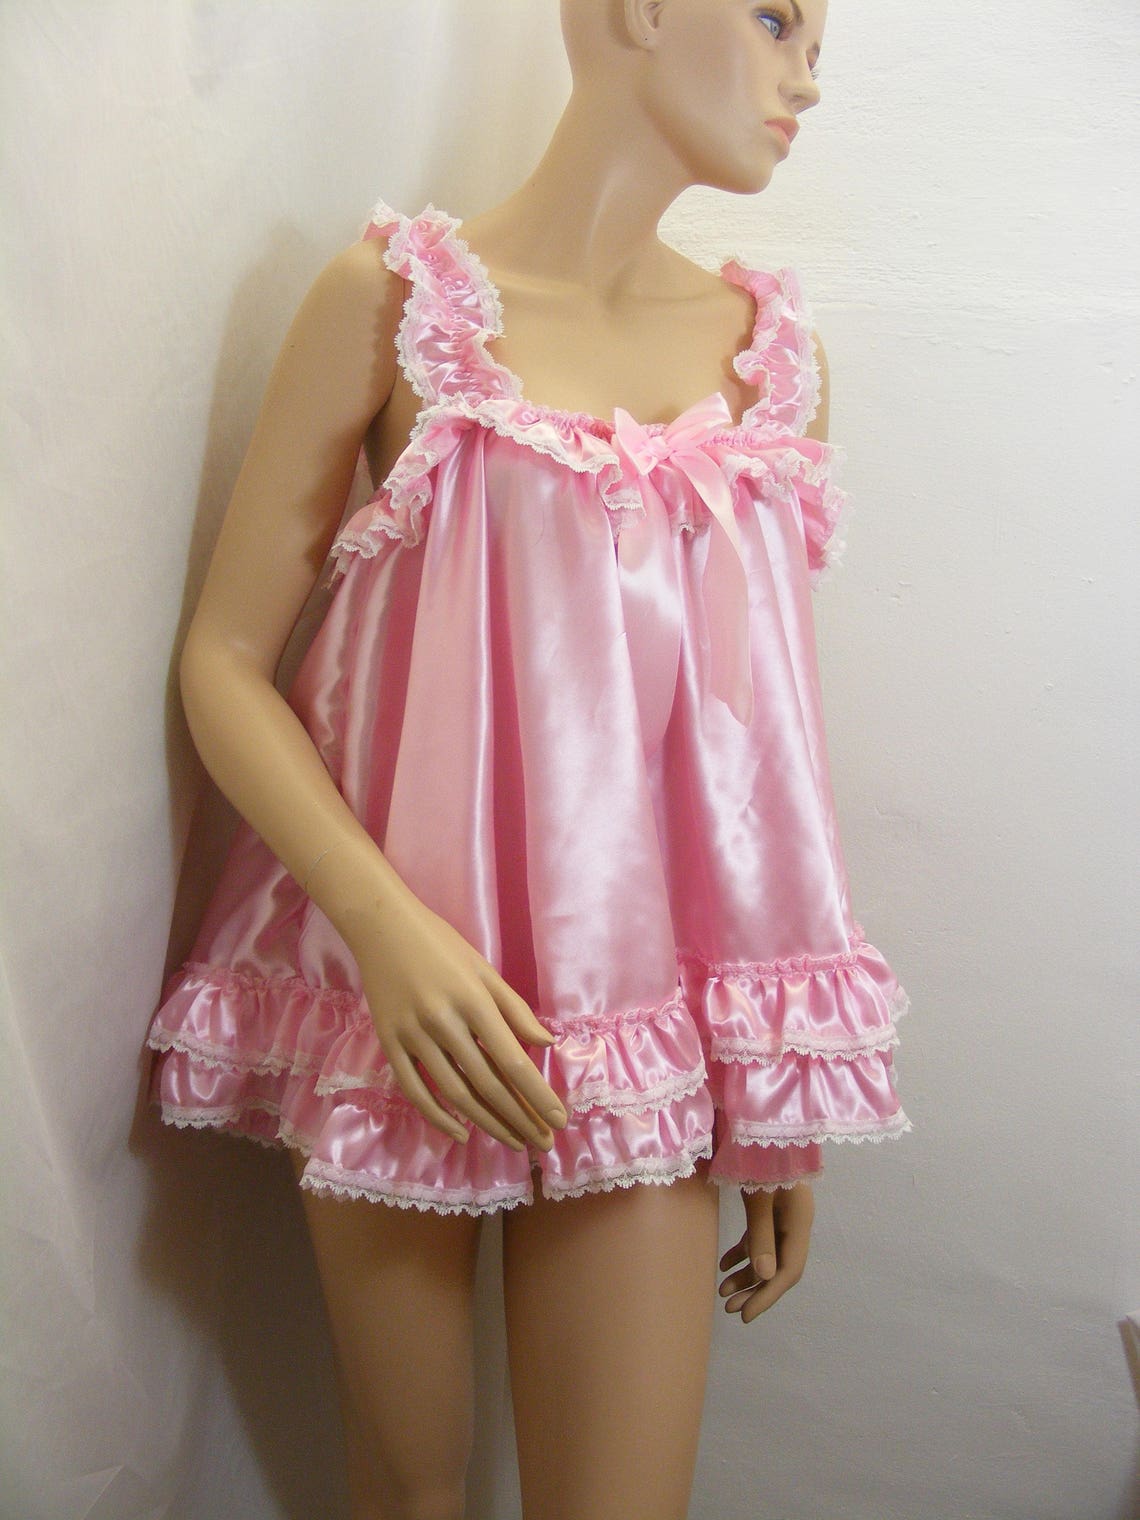 Sissy satin baby doll nightie negligee dress top cosplay | Etsy